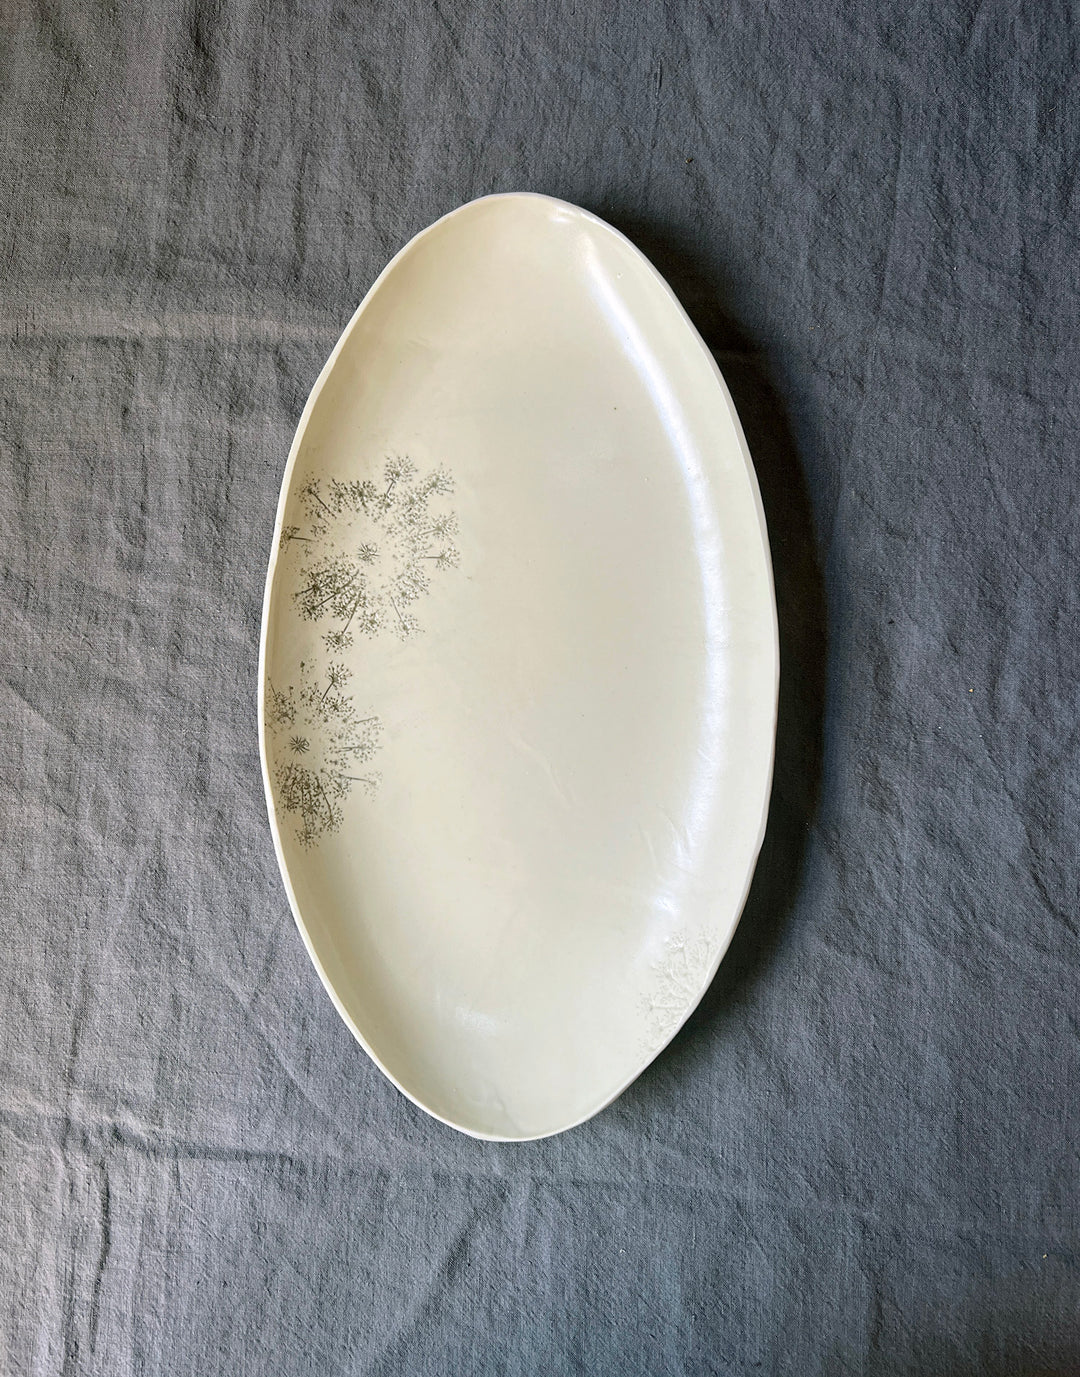 Queen Anne's Lace Oval Platter - Brown Sugar Glaze